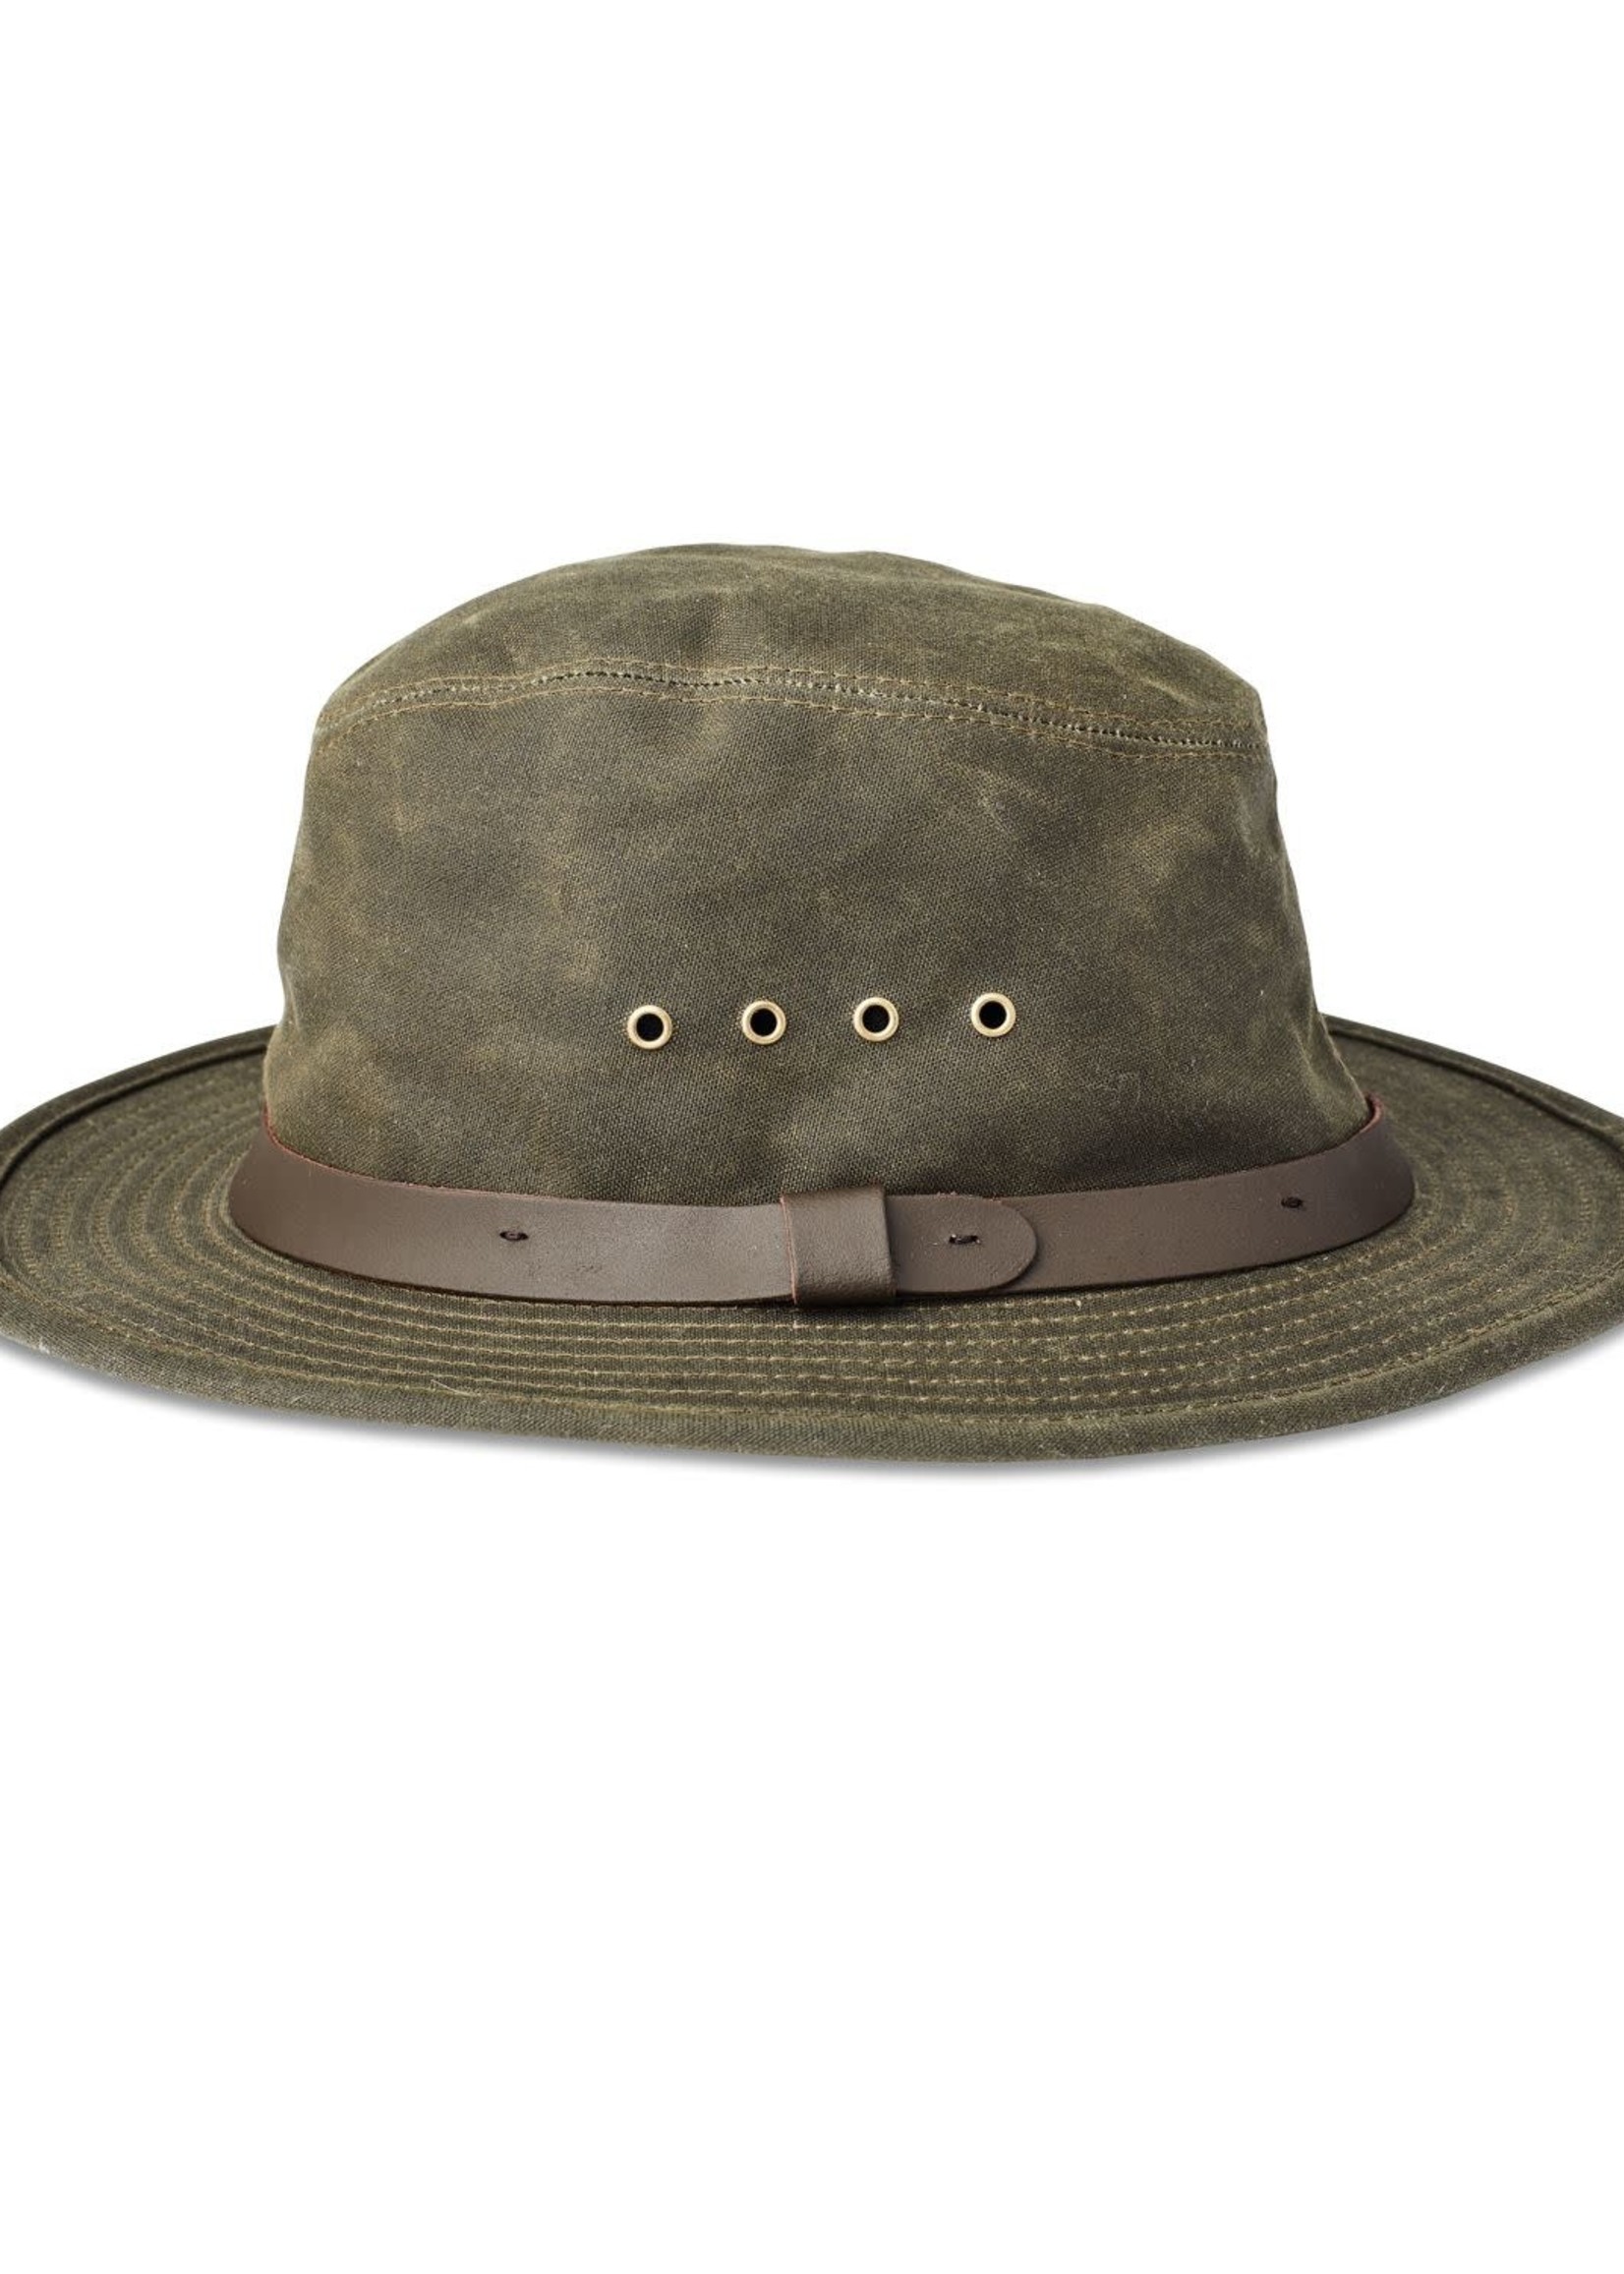 Filson Tin Packer Hat: OtterGreen